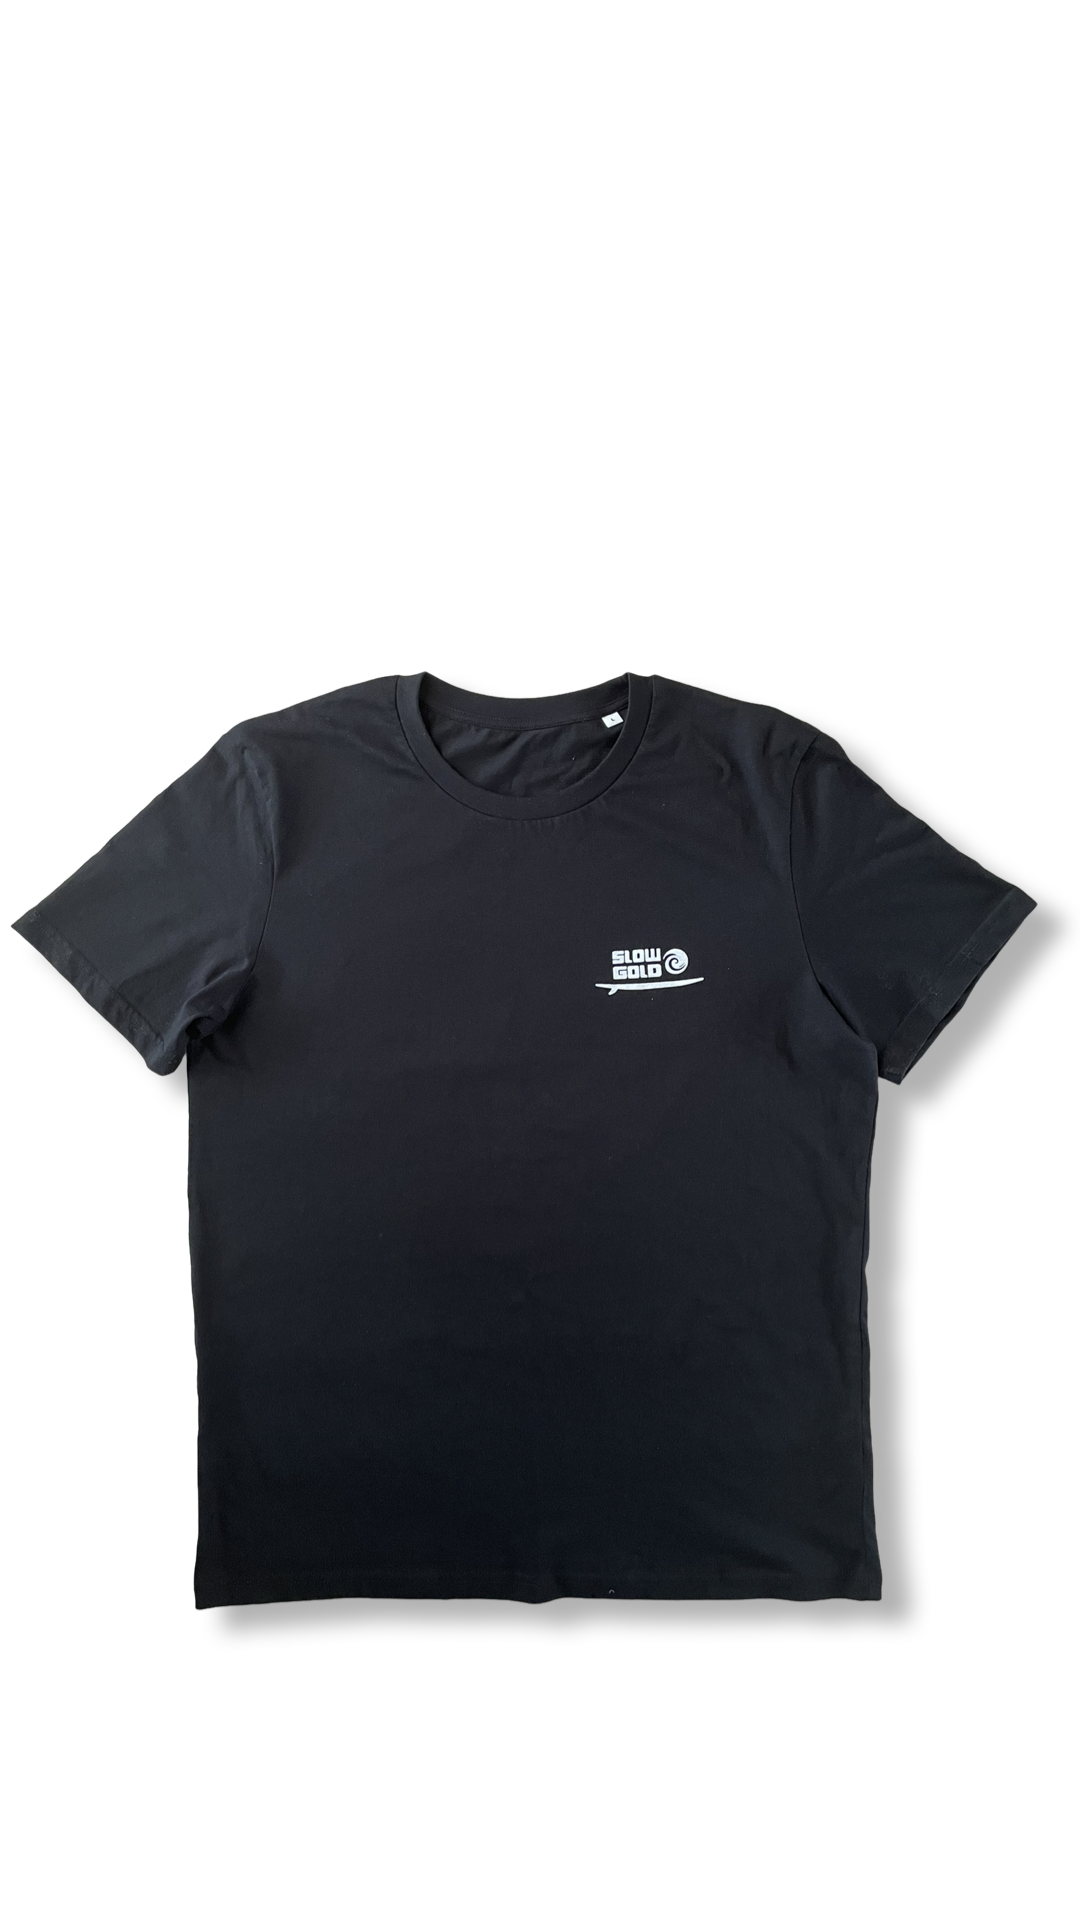 SlowGold 2nd Edition T-Shirt